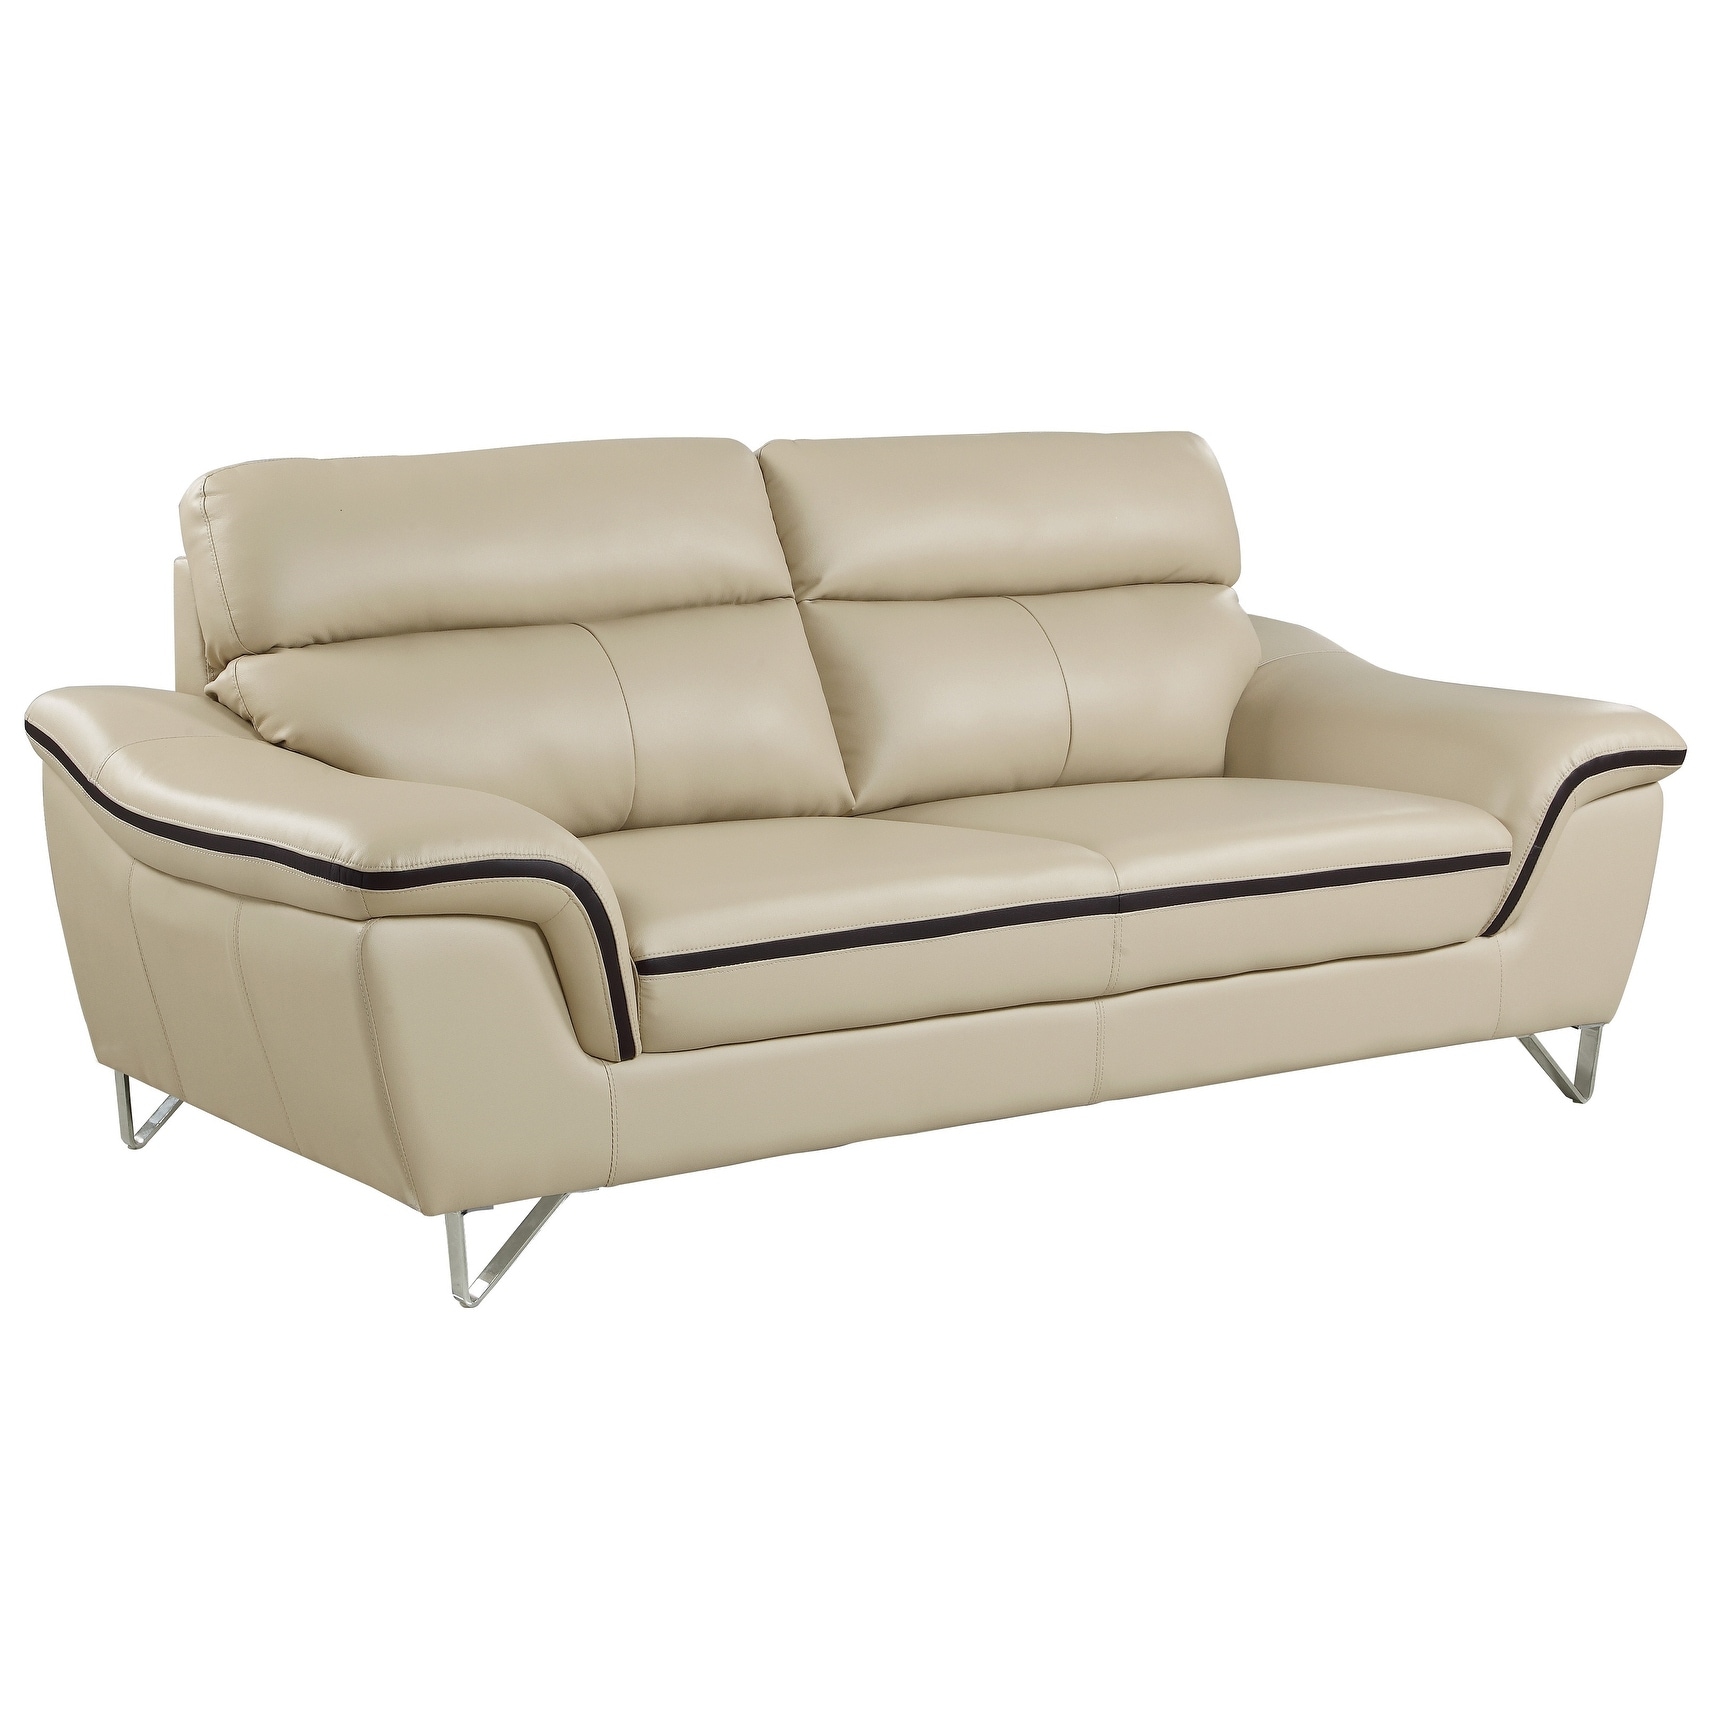 Doyle Luxury Leather/Match Upholstered Living Room Sofa